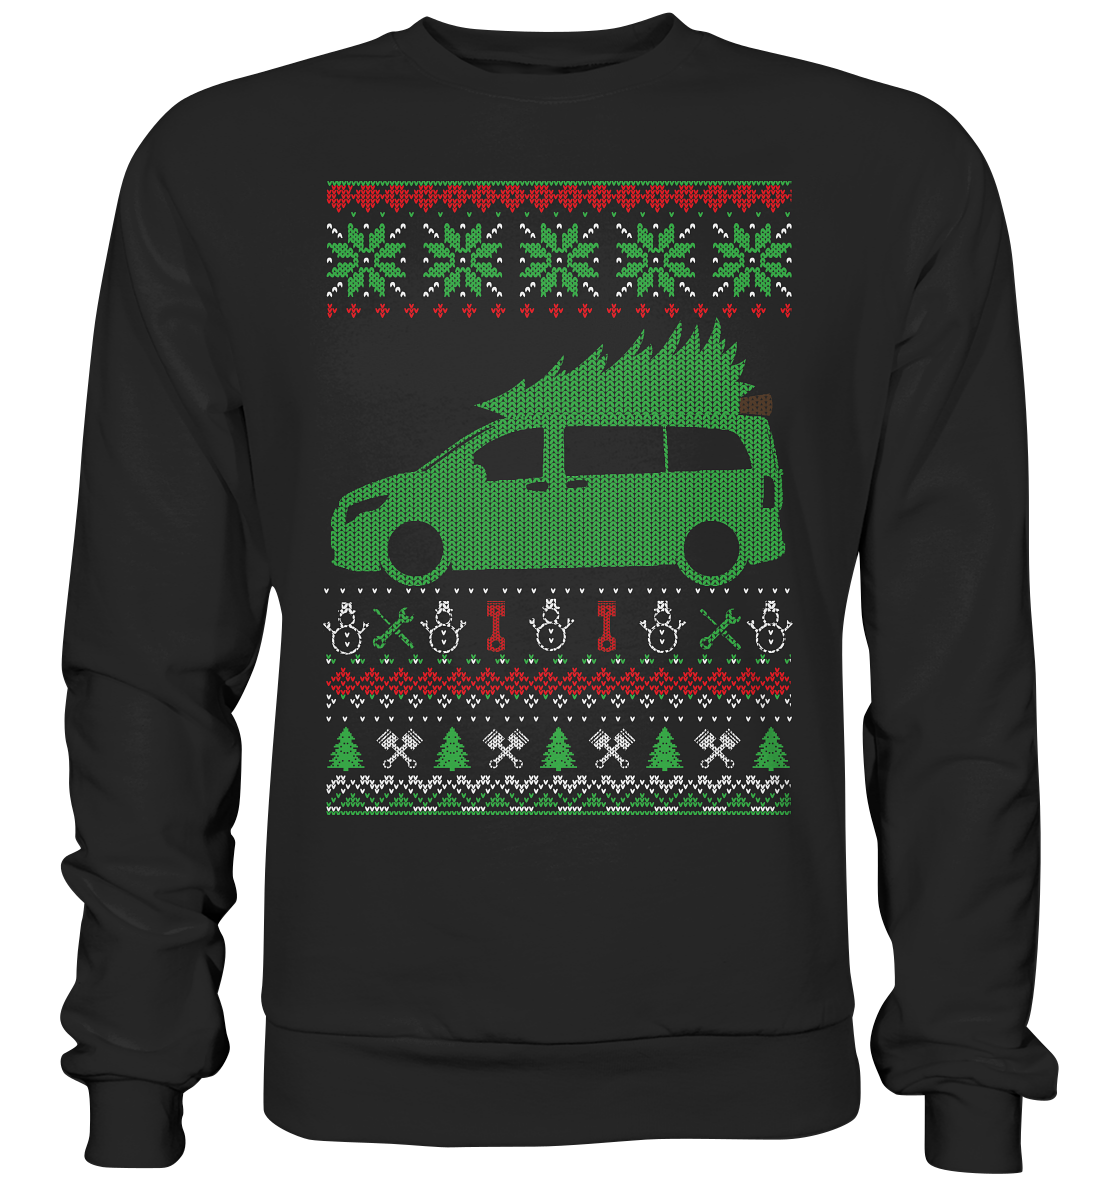 CODUGLY_MGKW447 - Premium Sweatshirt